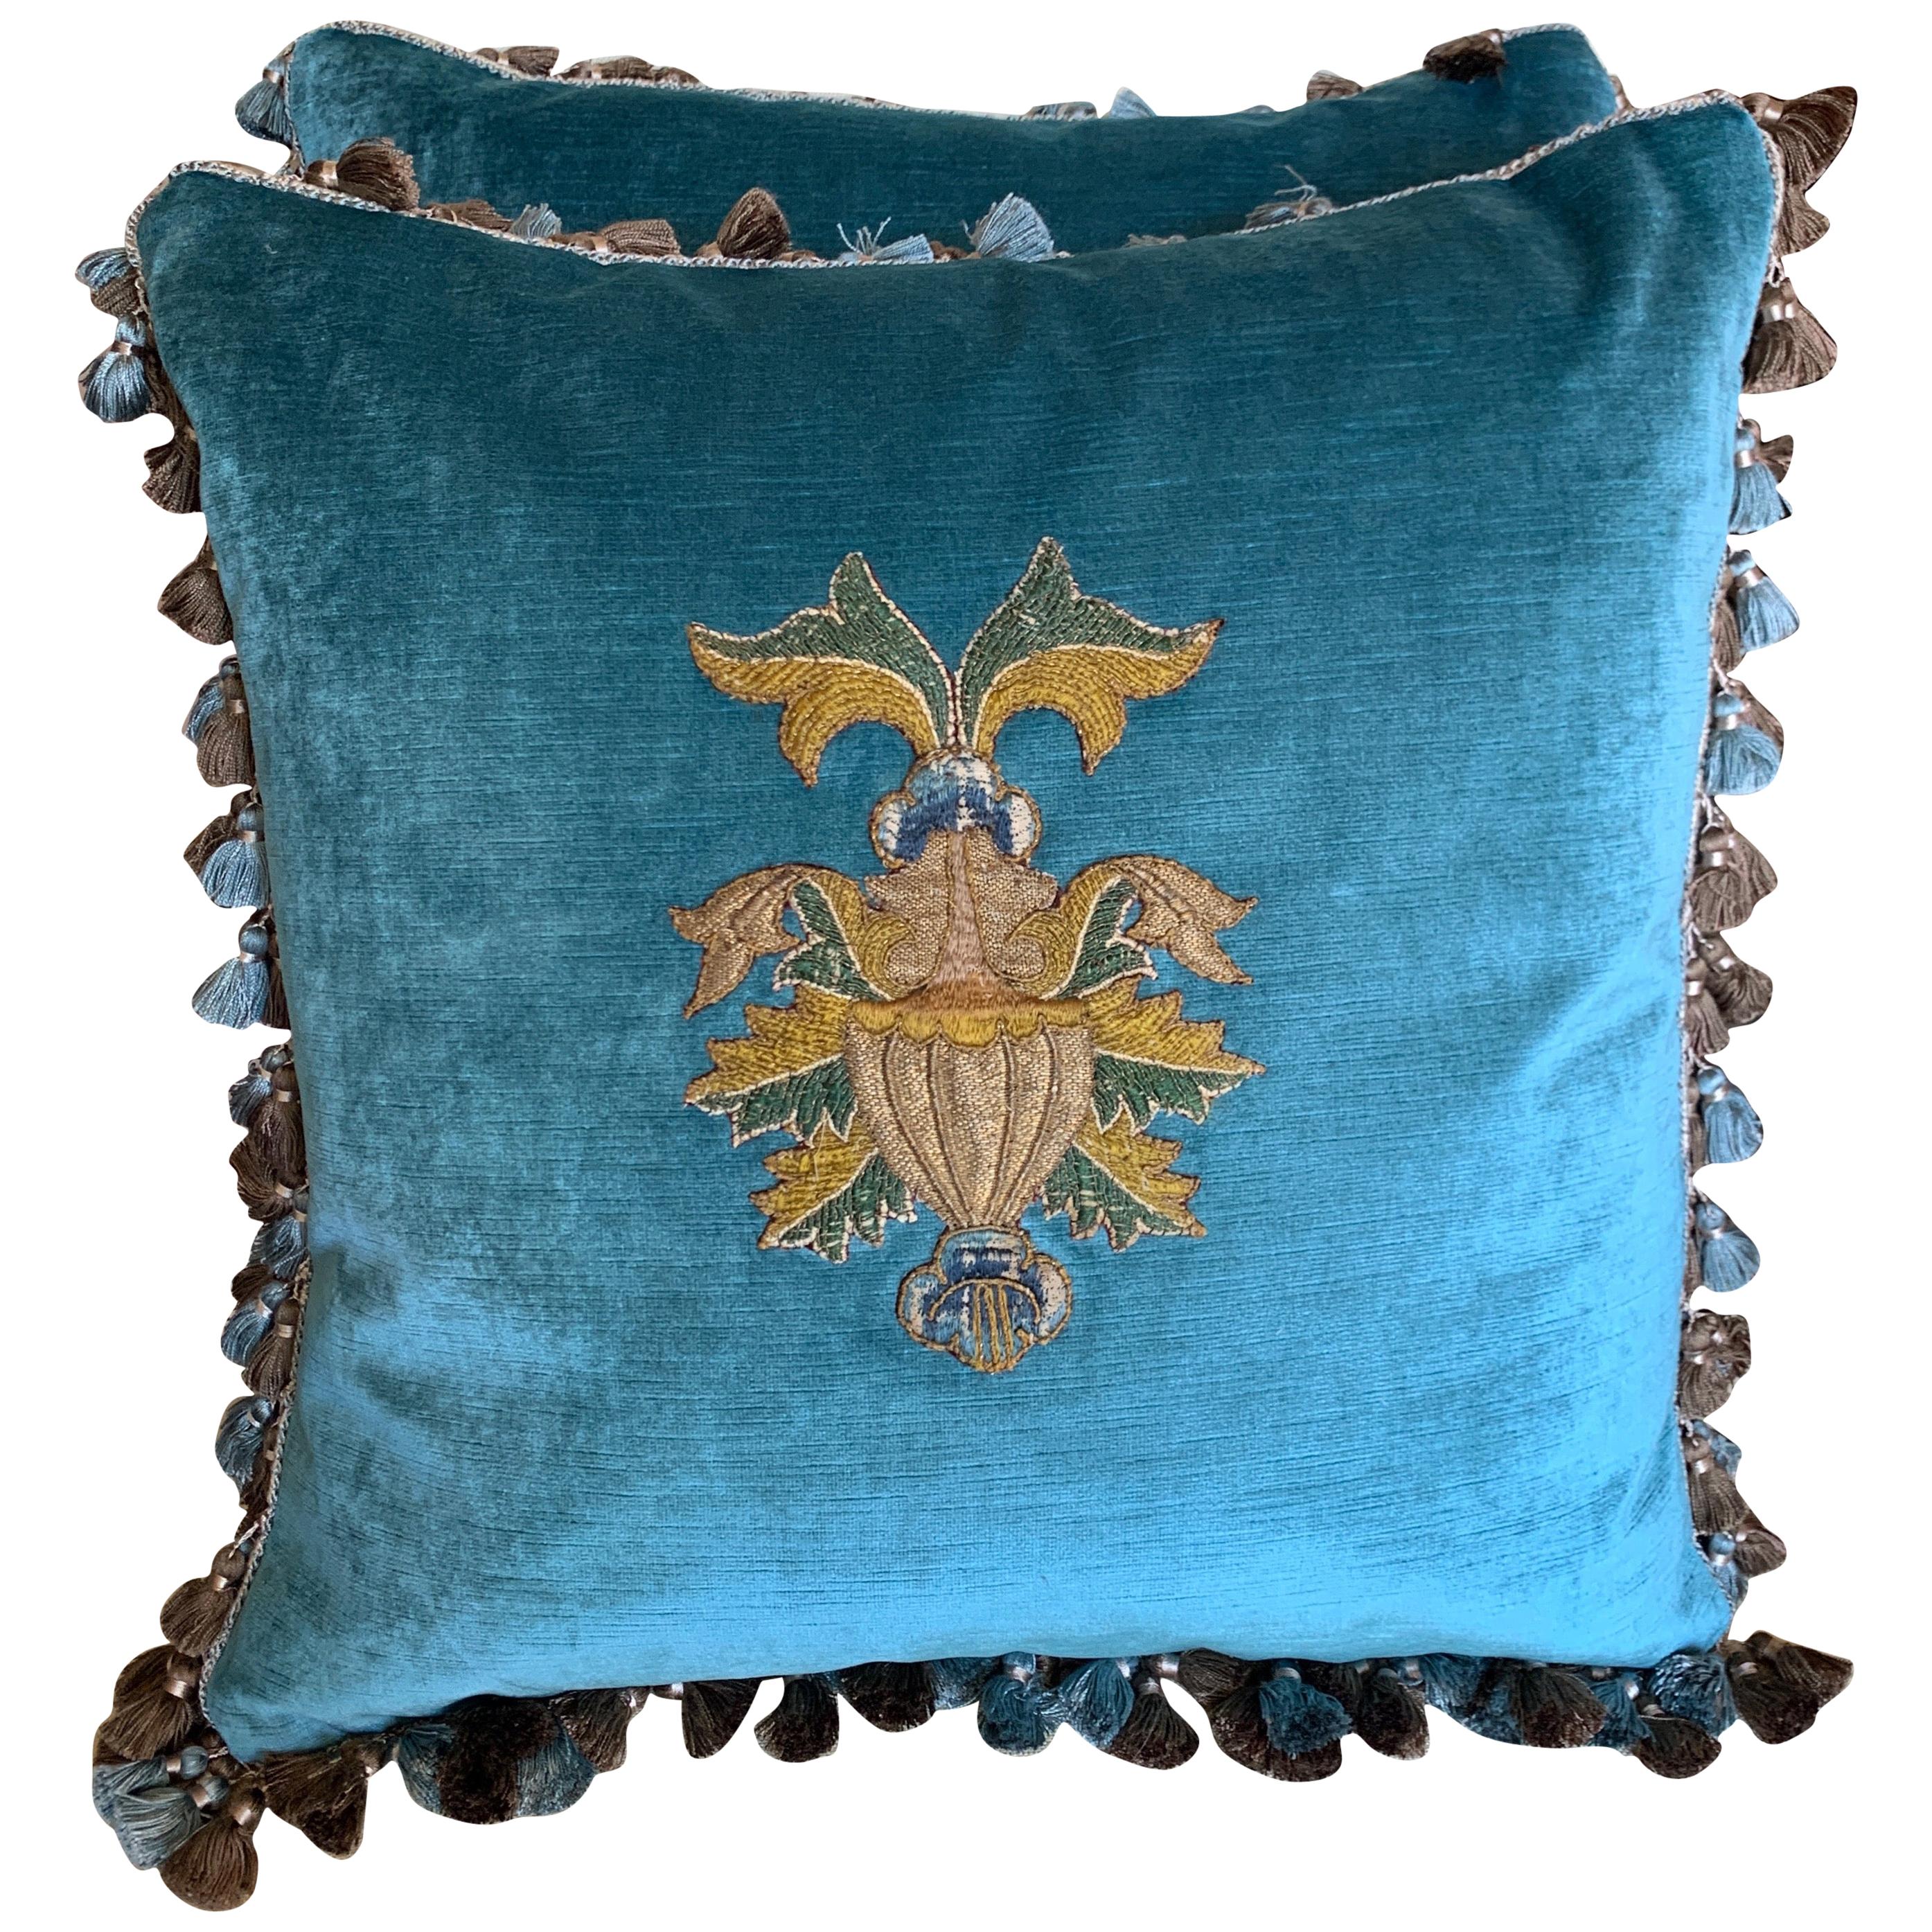 Pair of 18th Century Appliqué Pillows by Melissa Levinson